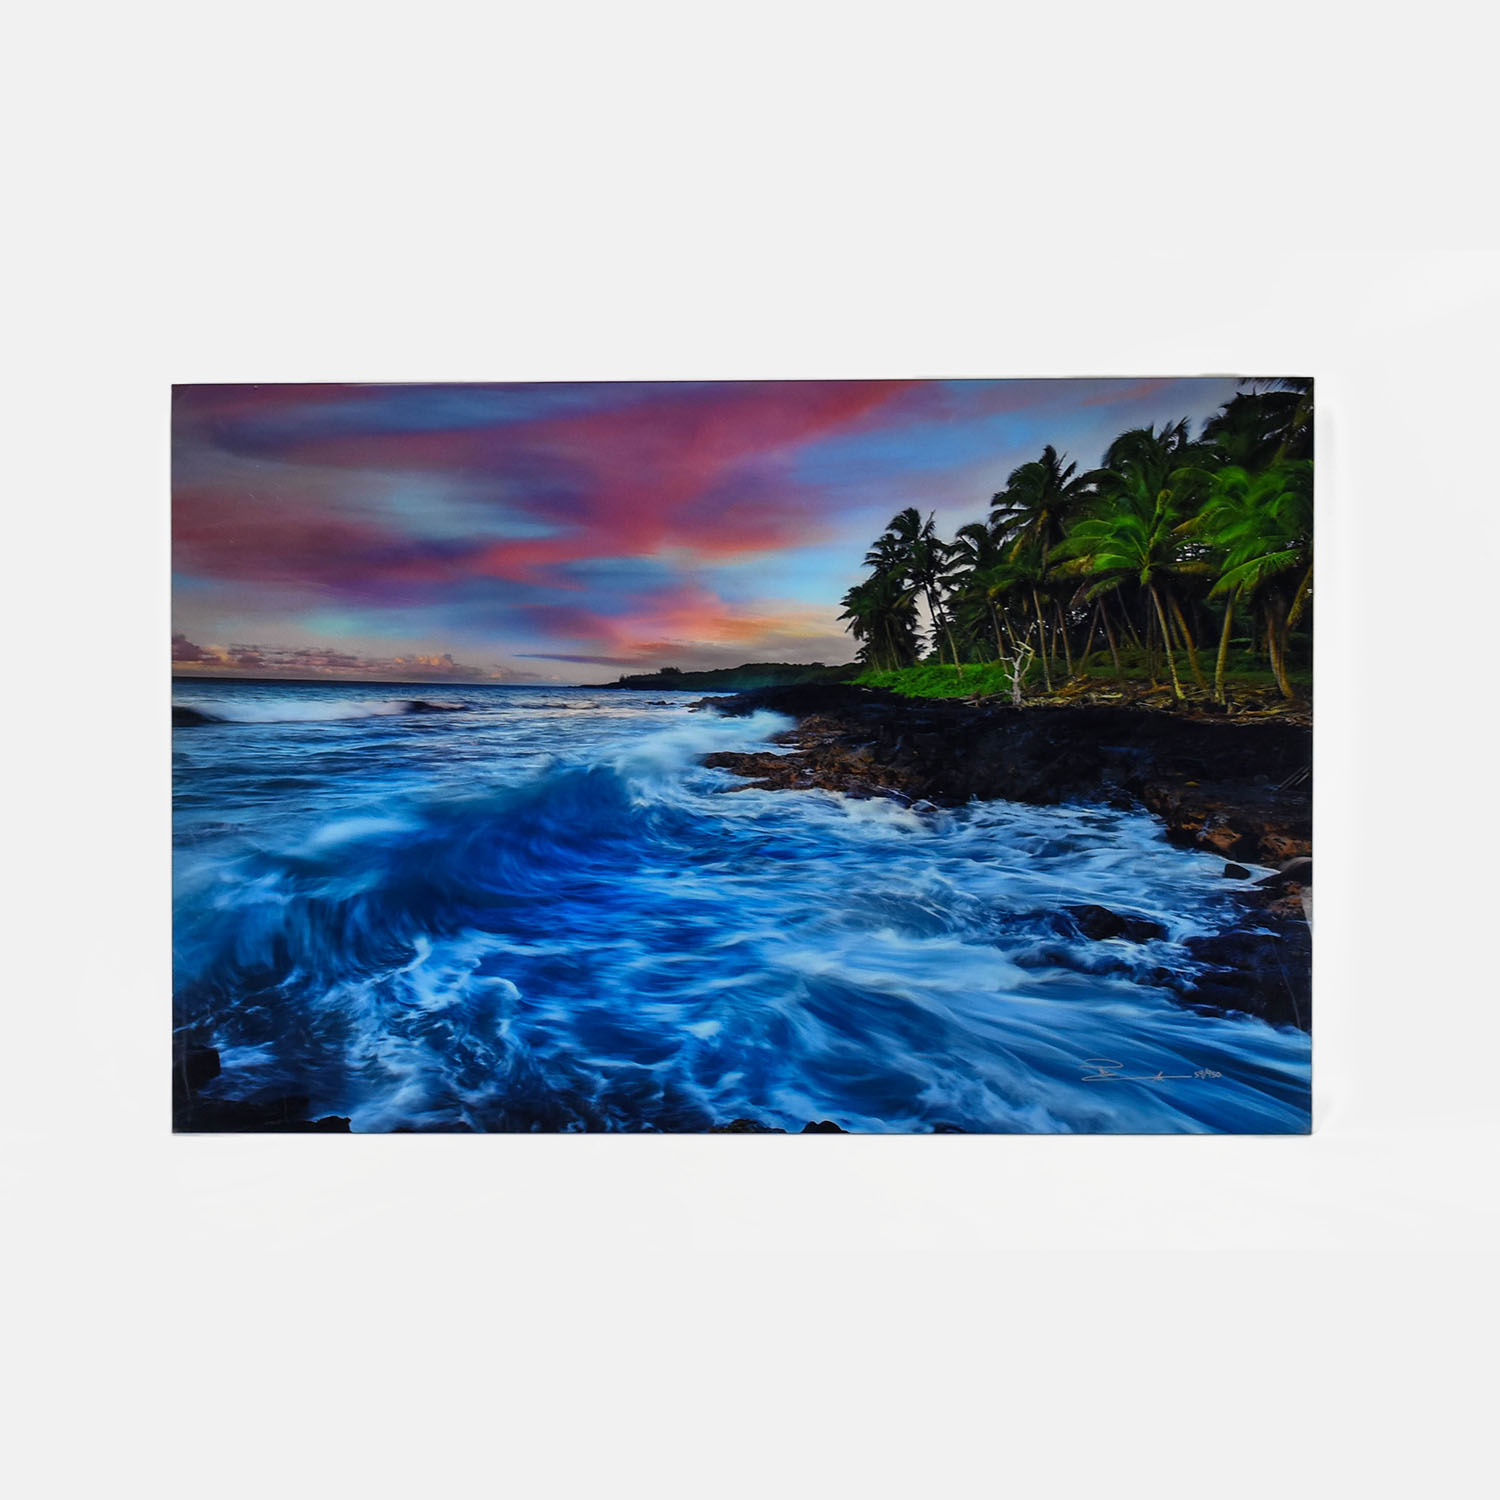 Lik, Peter Landscape Photograph on Acrylic Tropical Island Waves 59/950